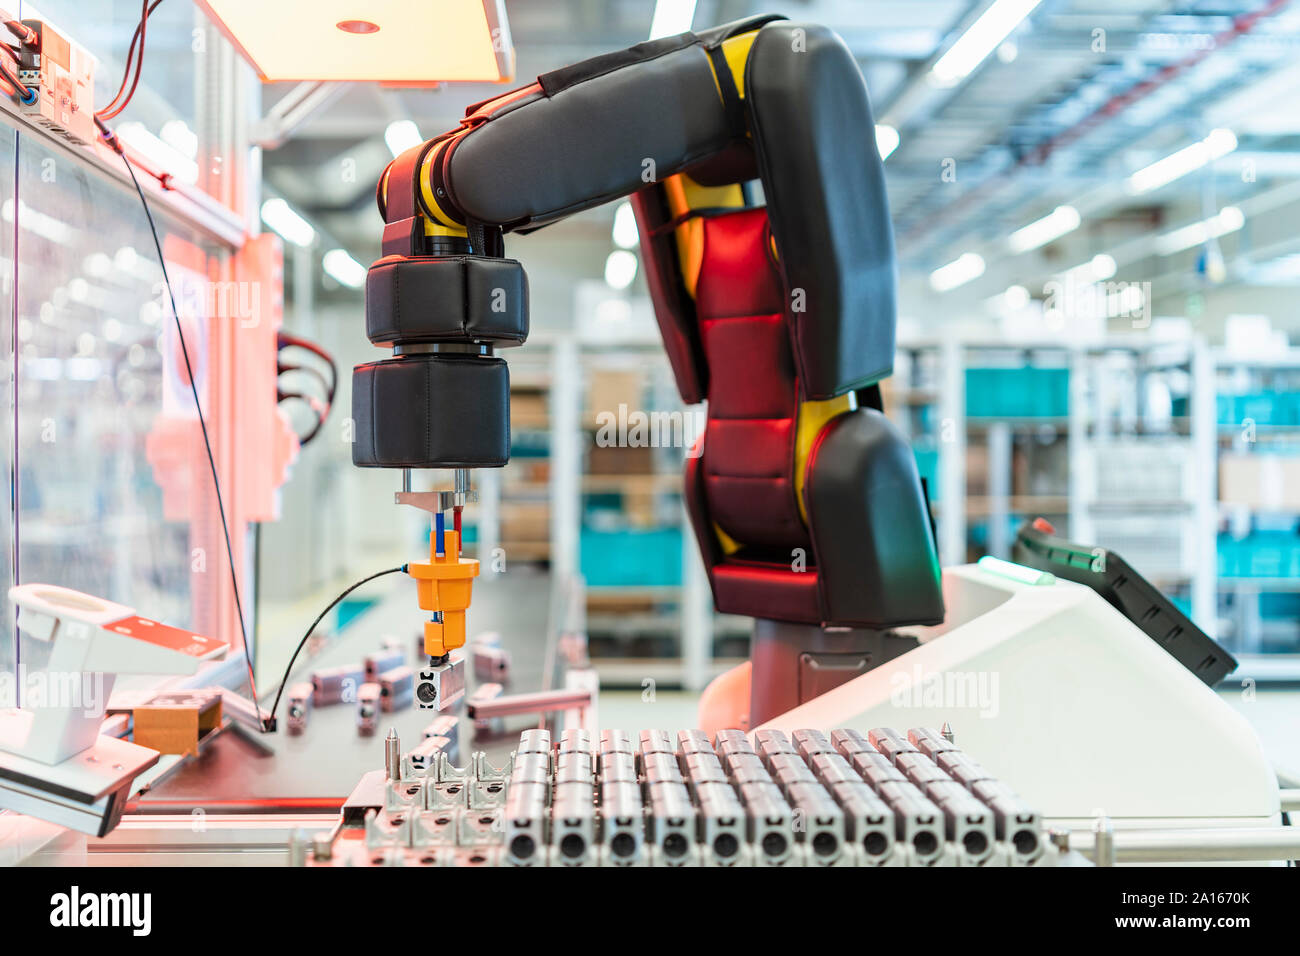 Arm der Assembly Robot Abholung Maschine teil, Stuttgart, Deutschland Stockfoto